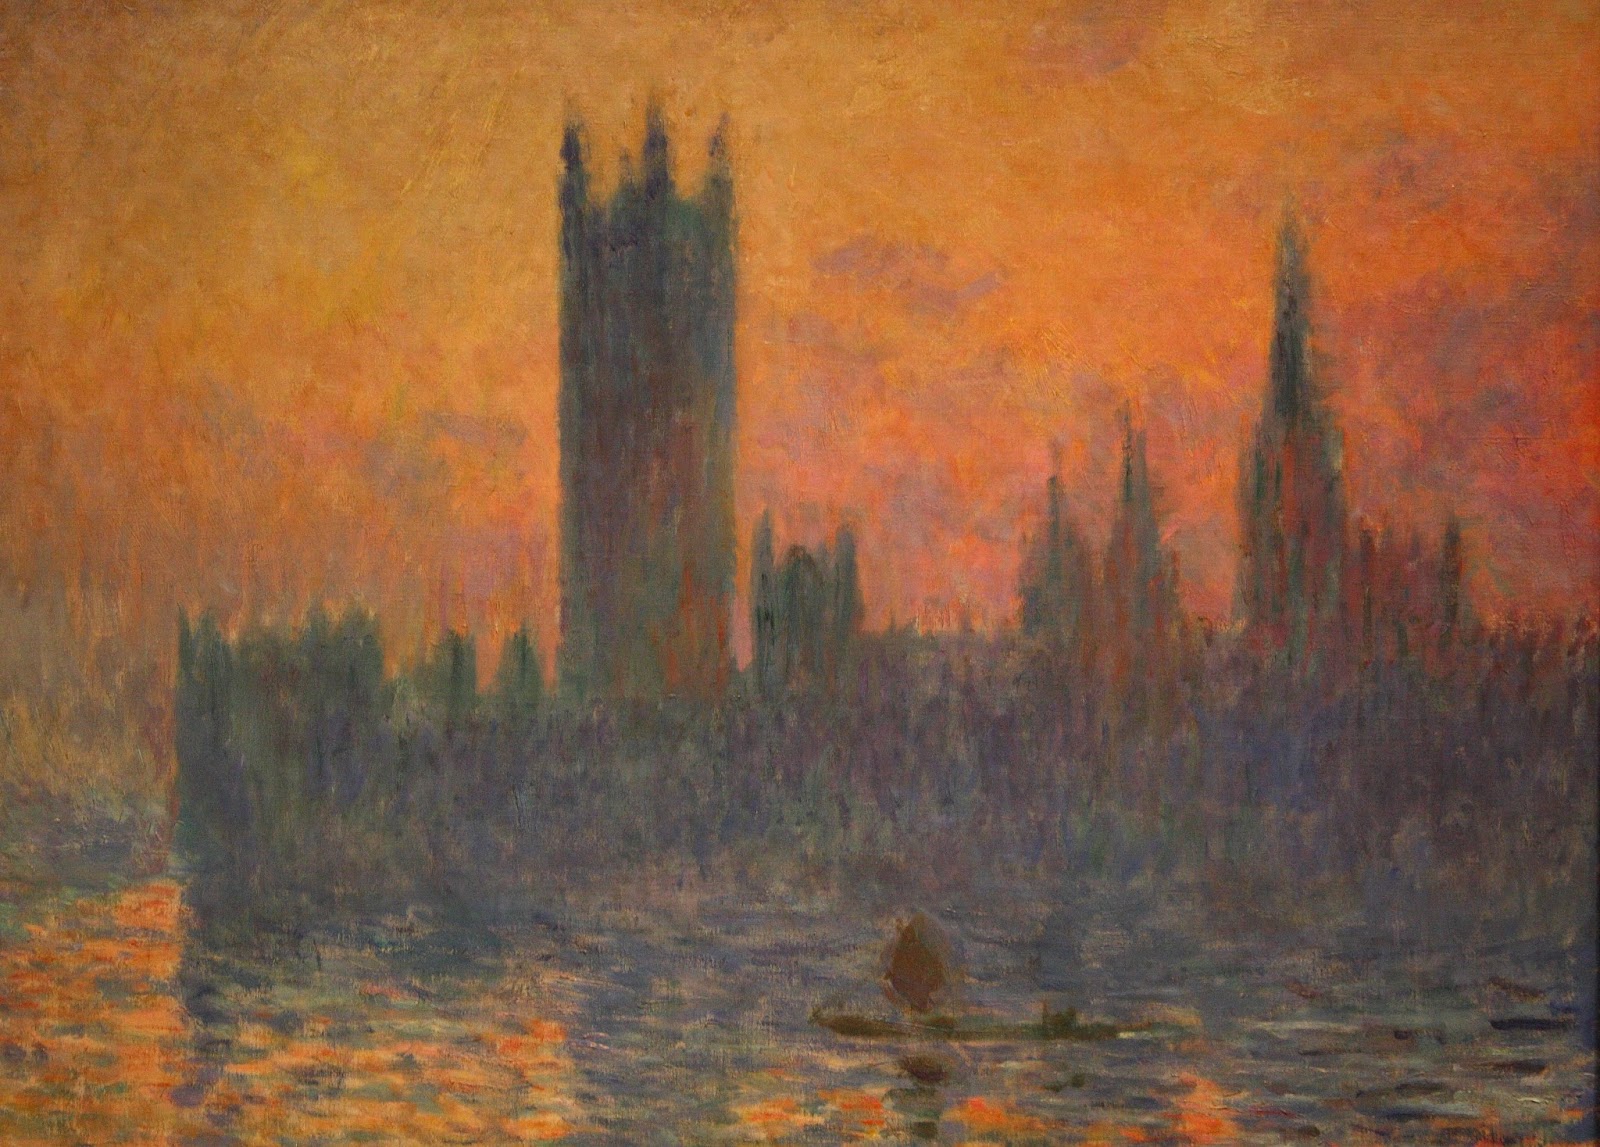 Claude+Monet-1840-1926 (759).jpg